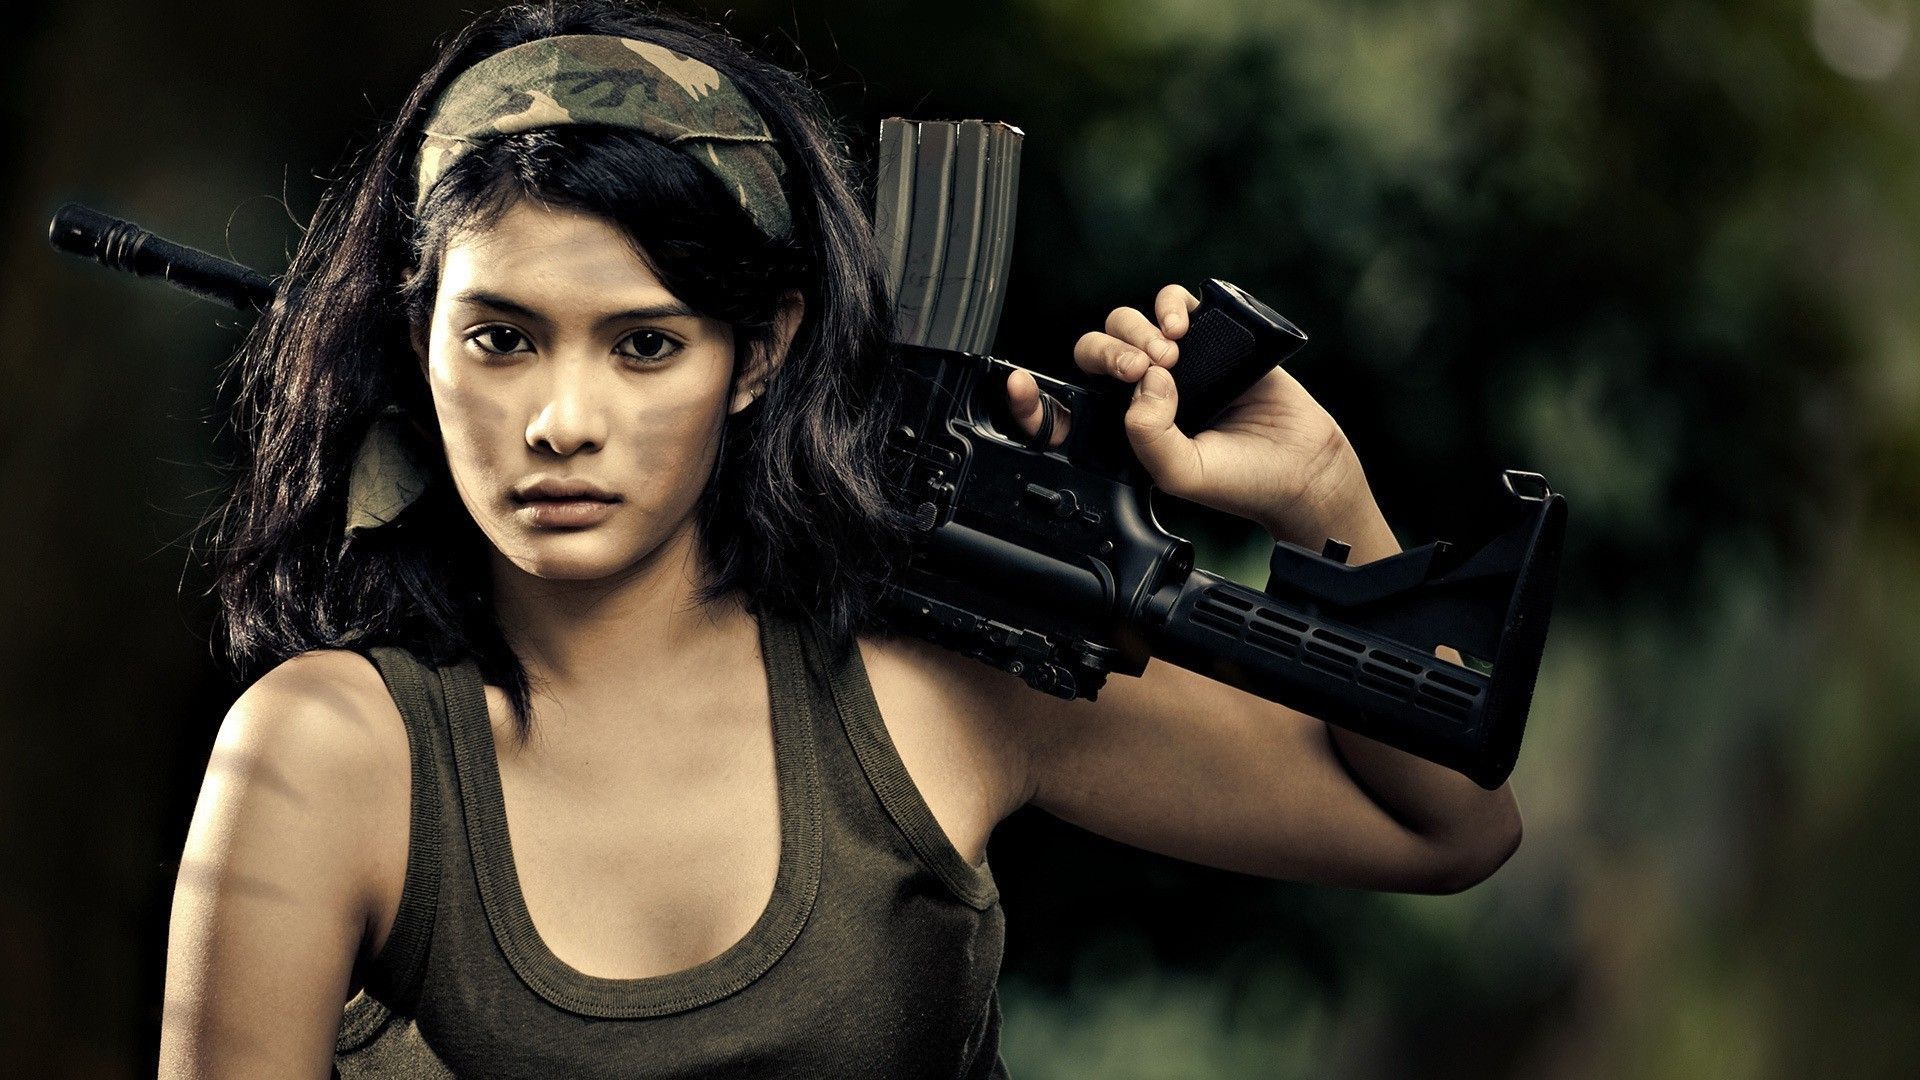 Free download Army Girl with Gun HD Wallpaper New HD Wallpaper